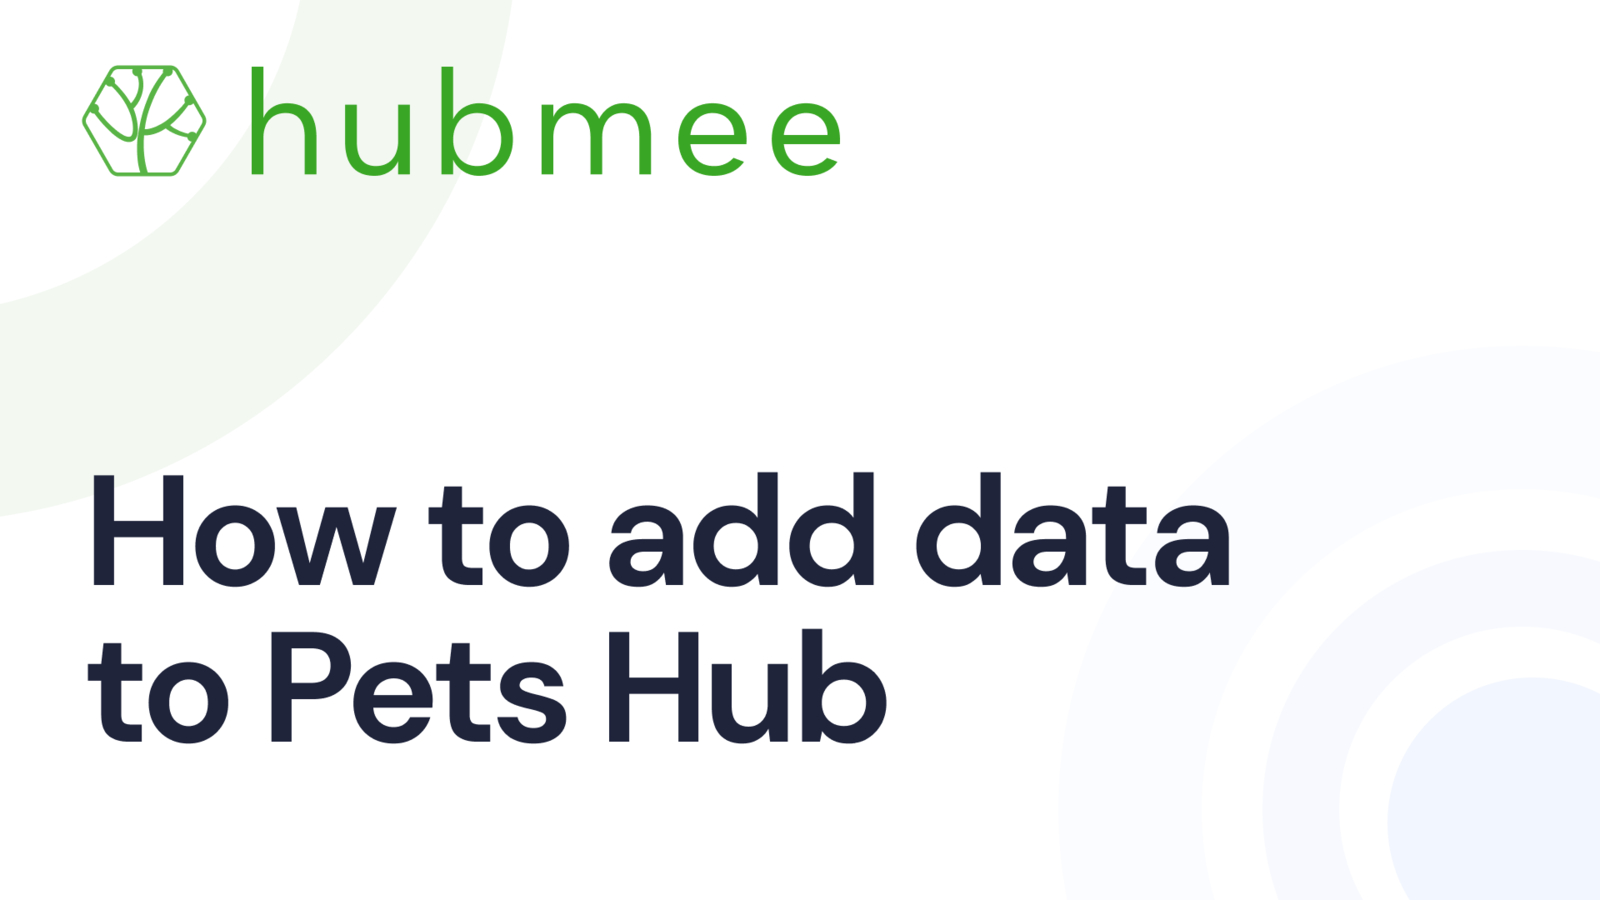 How to add data to Hubmee’s Pets Hub